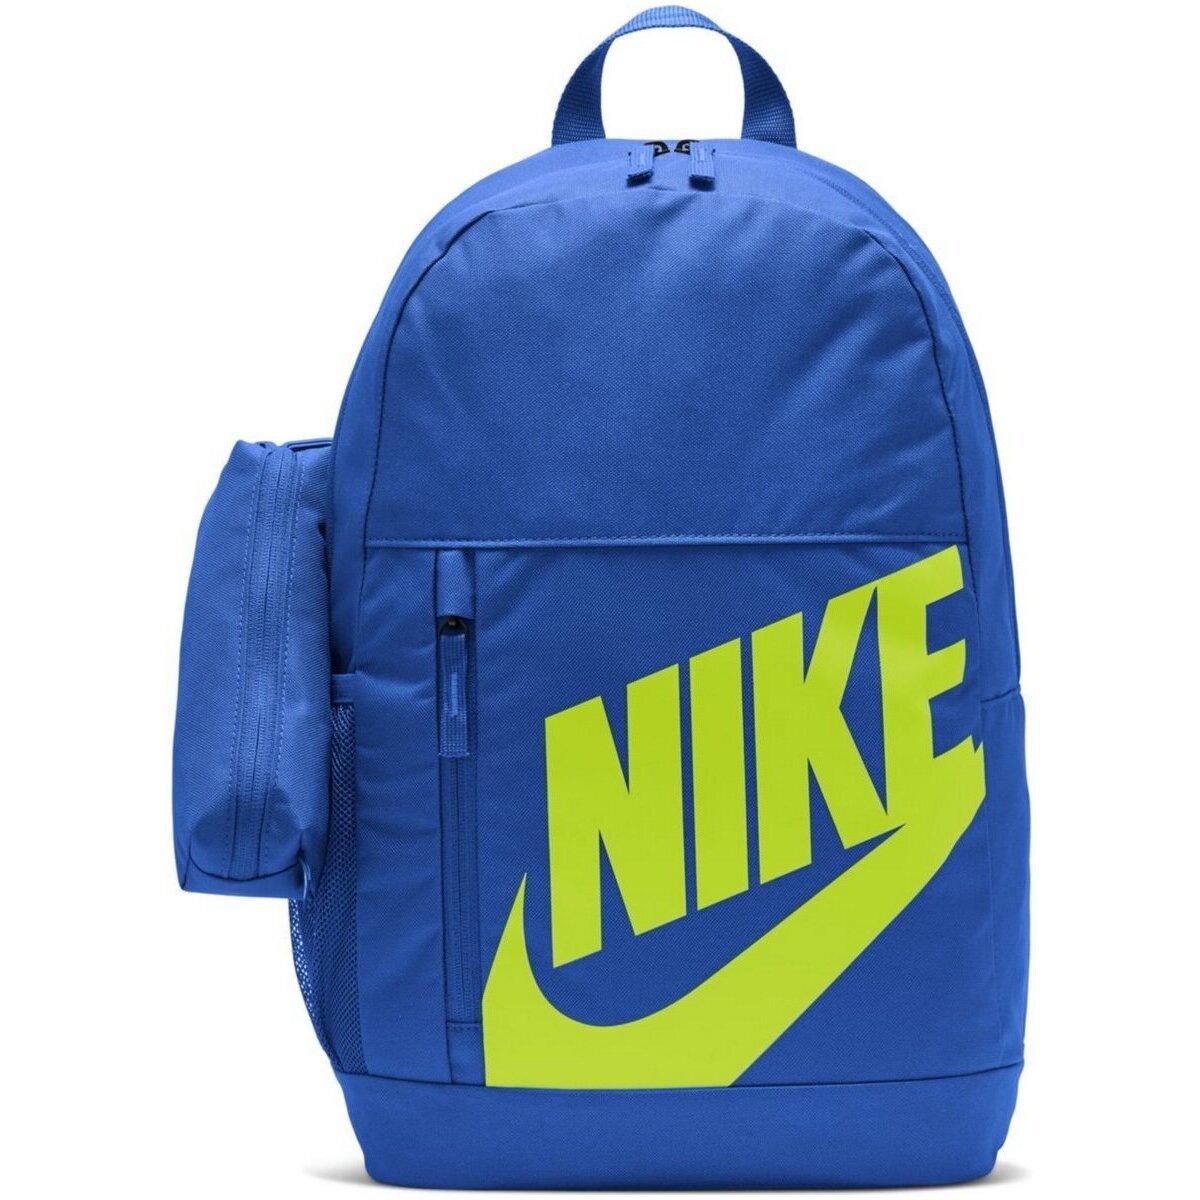 Nike Bleu xhahtsBl